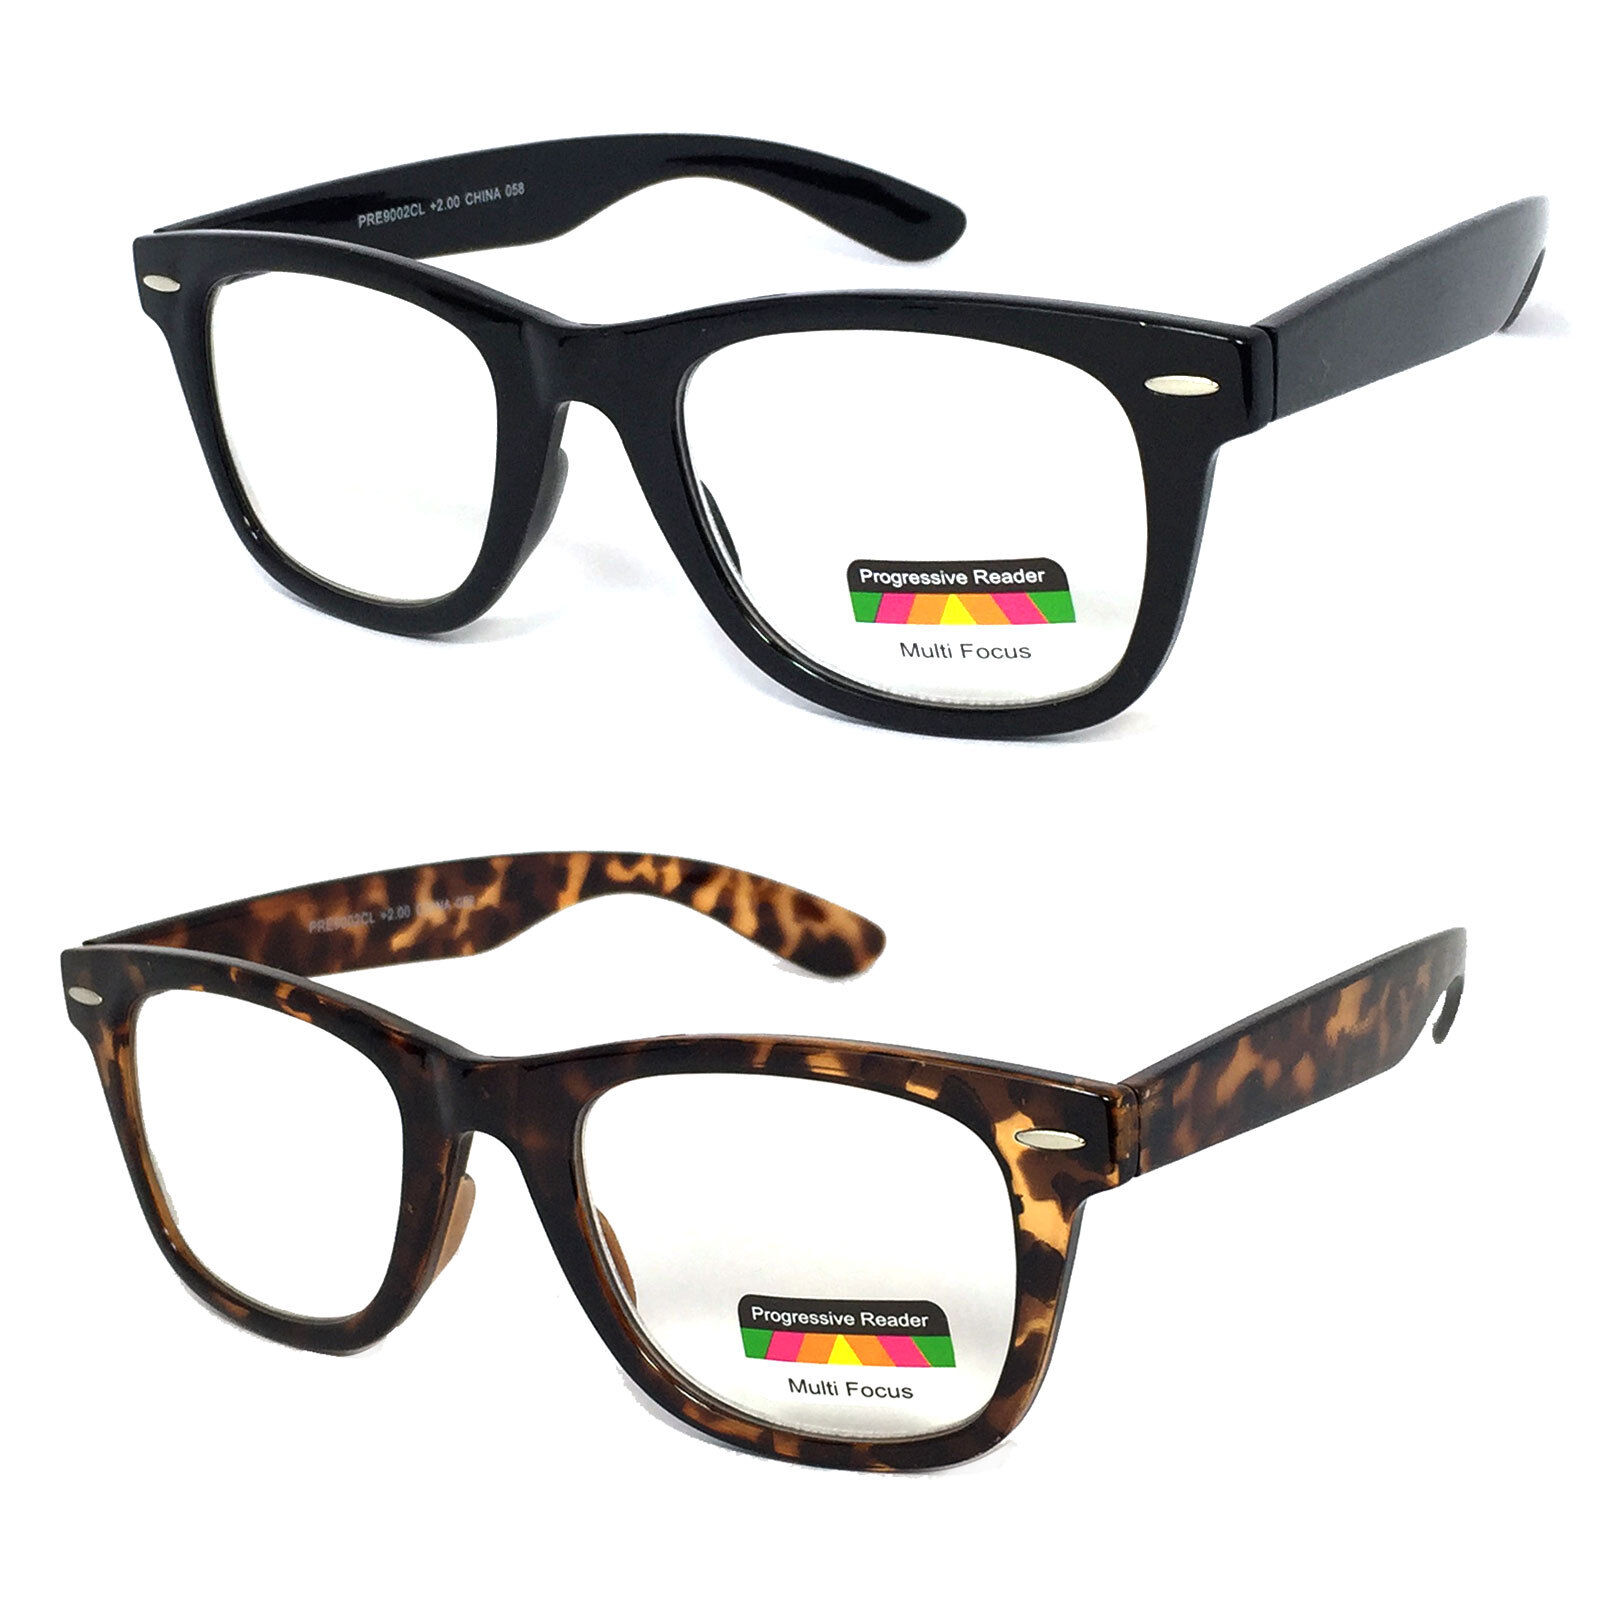 Square Frame Multi Focus Progressive Reading Glasses 3 Strengths in 1 Reader Unbranded RE84